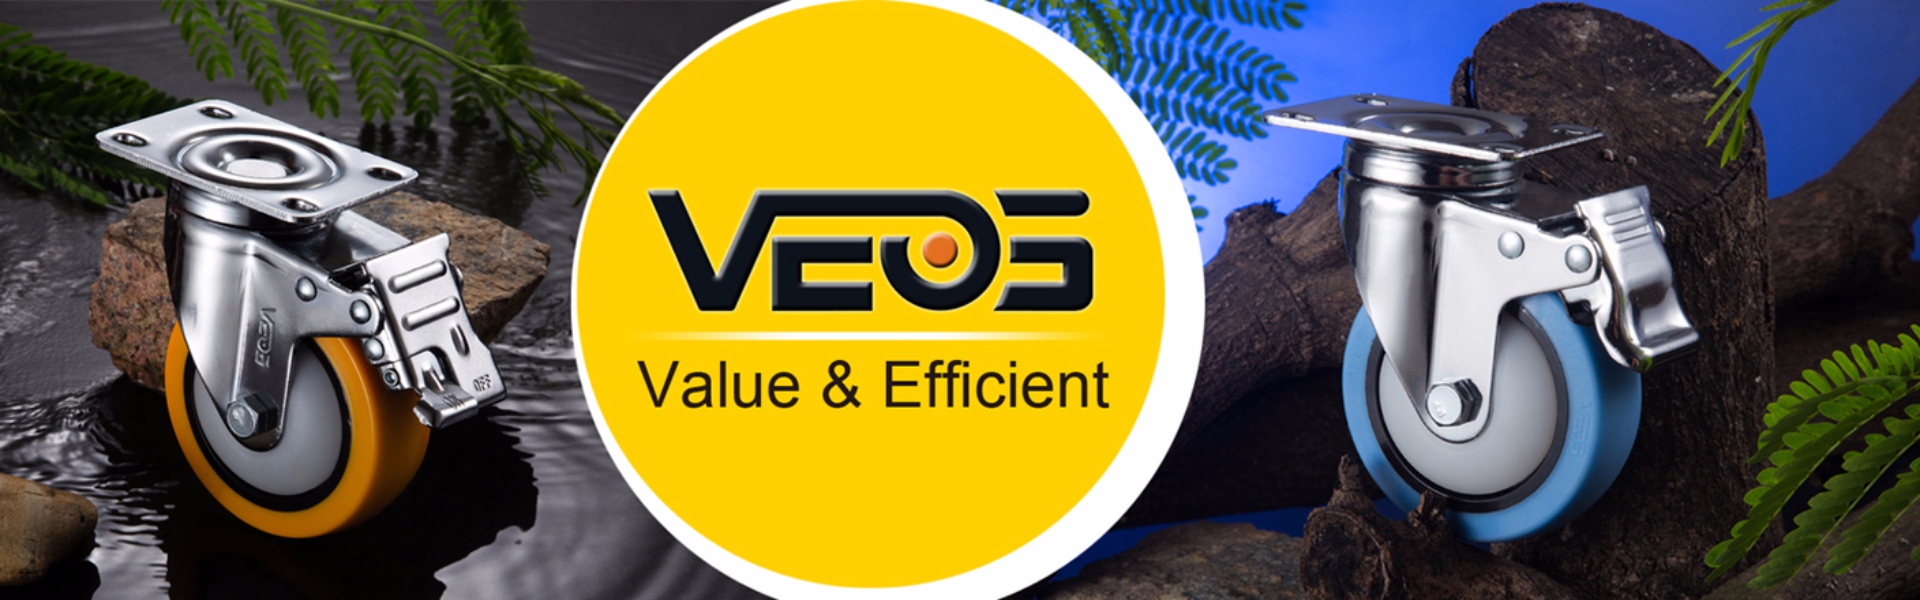 VEOS Caster Manufacturing Co. Ltd.